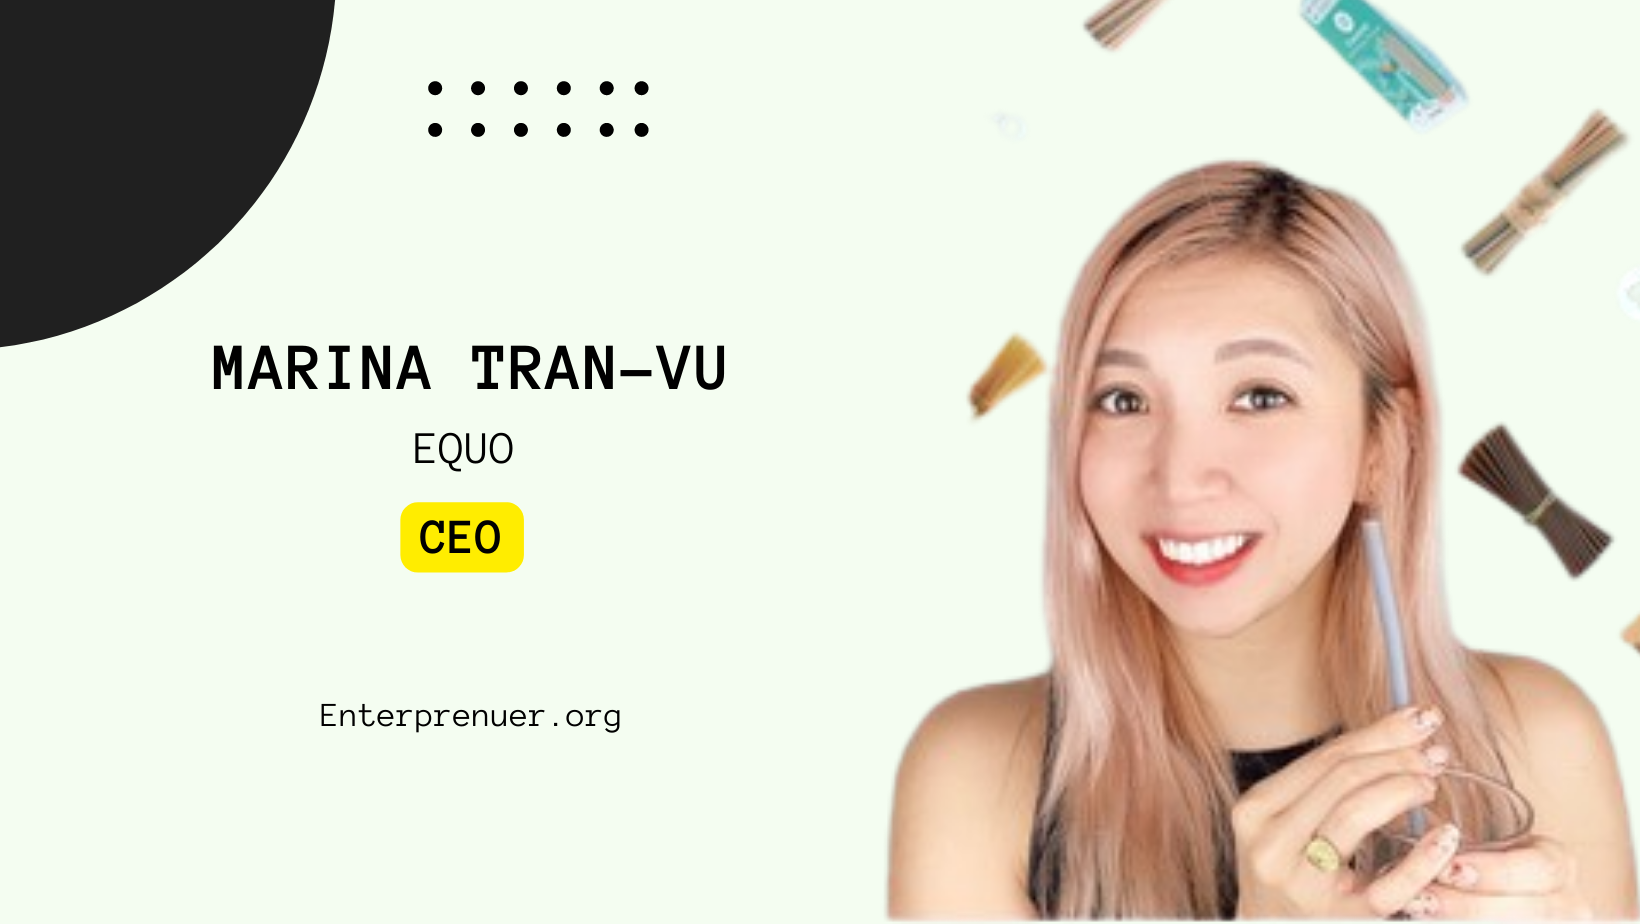 Meet-Marina-Tran-Vu-CEO-of-EQUO.png